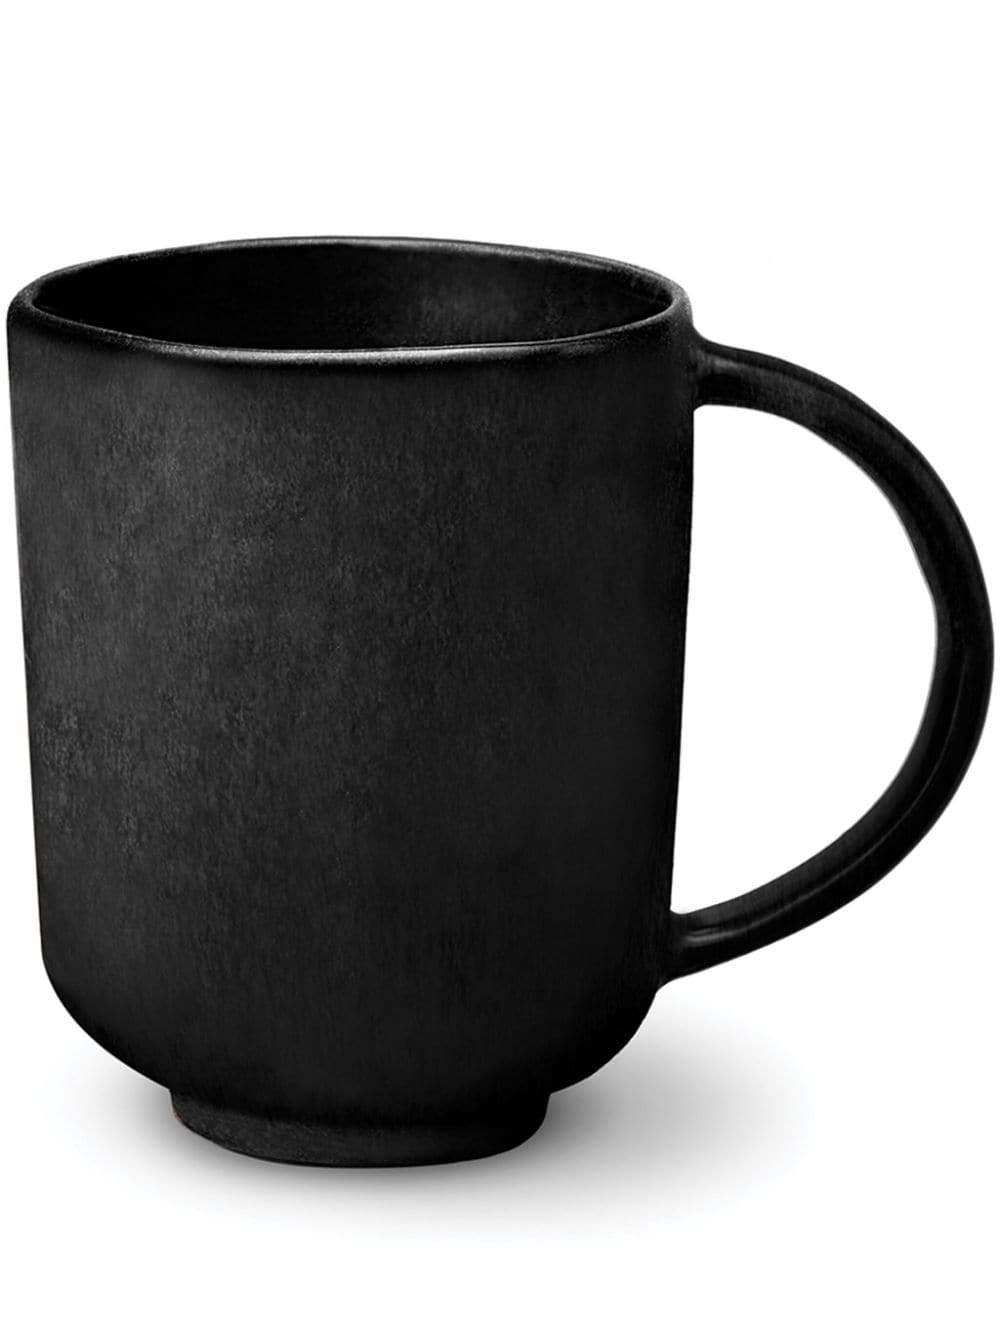 L'Objet Terra porcelain mug (350ml) - Black von L'Objet